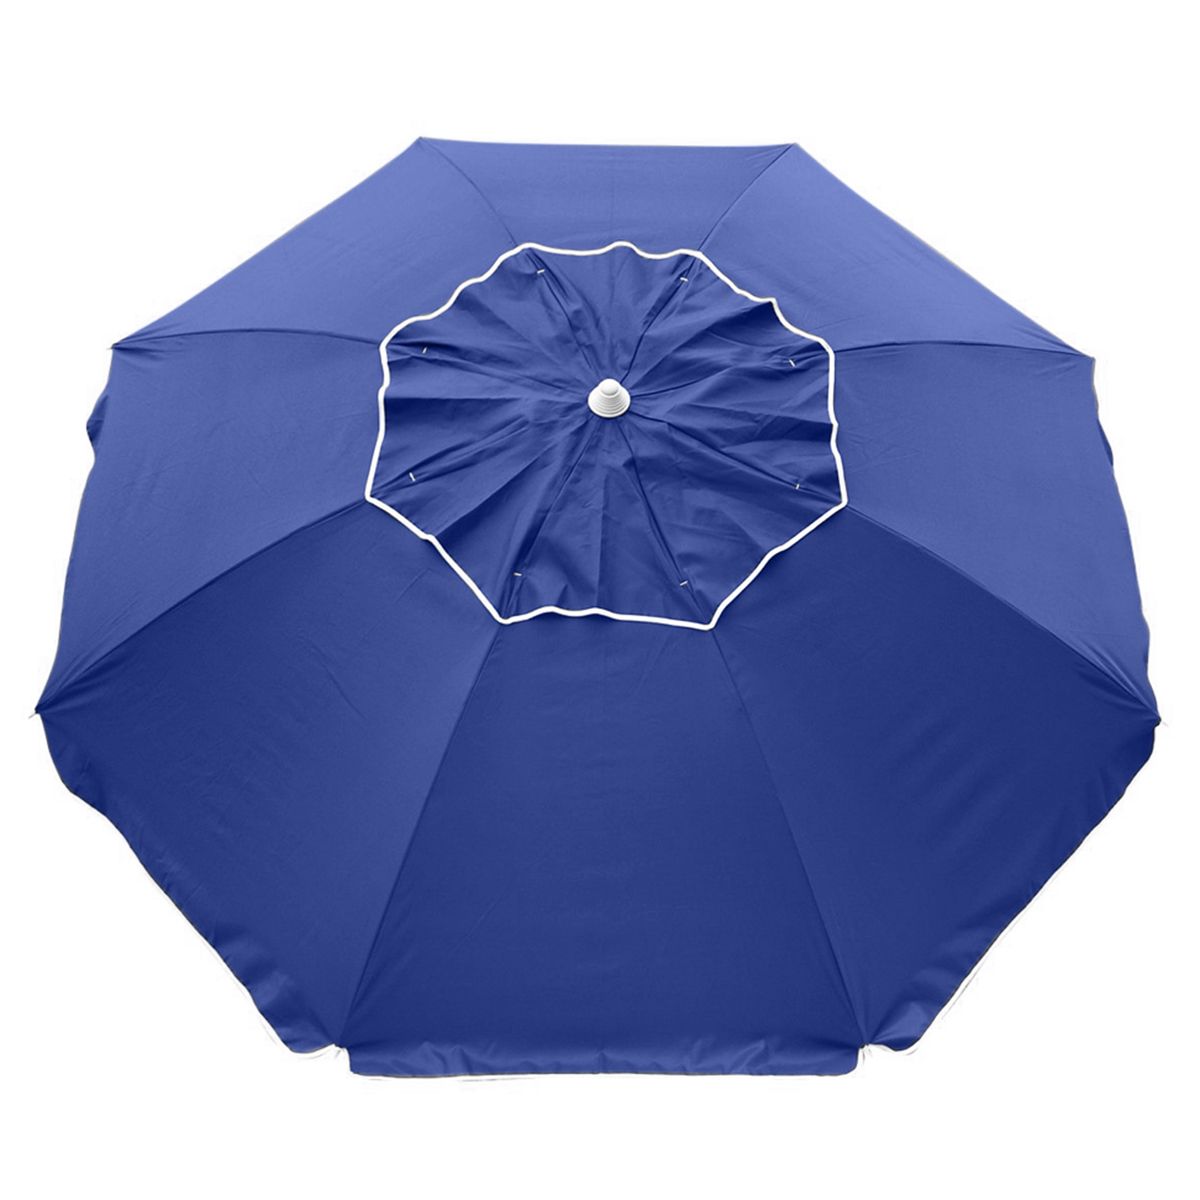 Beachcomber 210cm Beach Umbrella - Navy